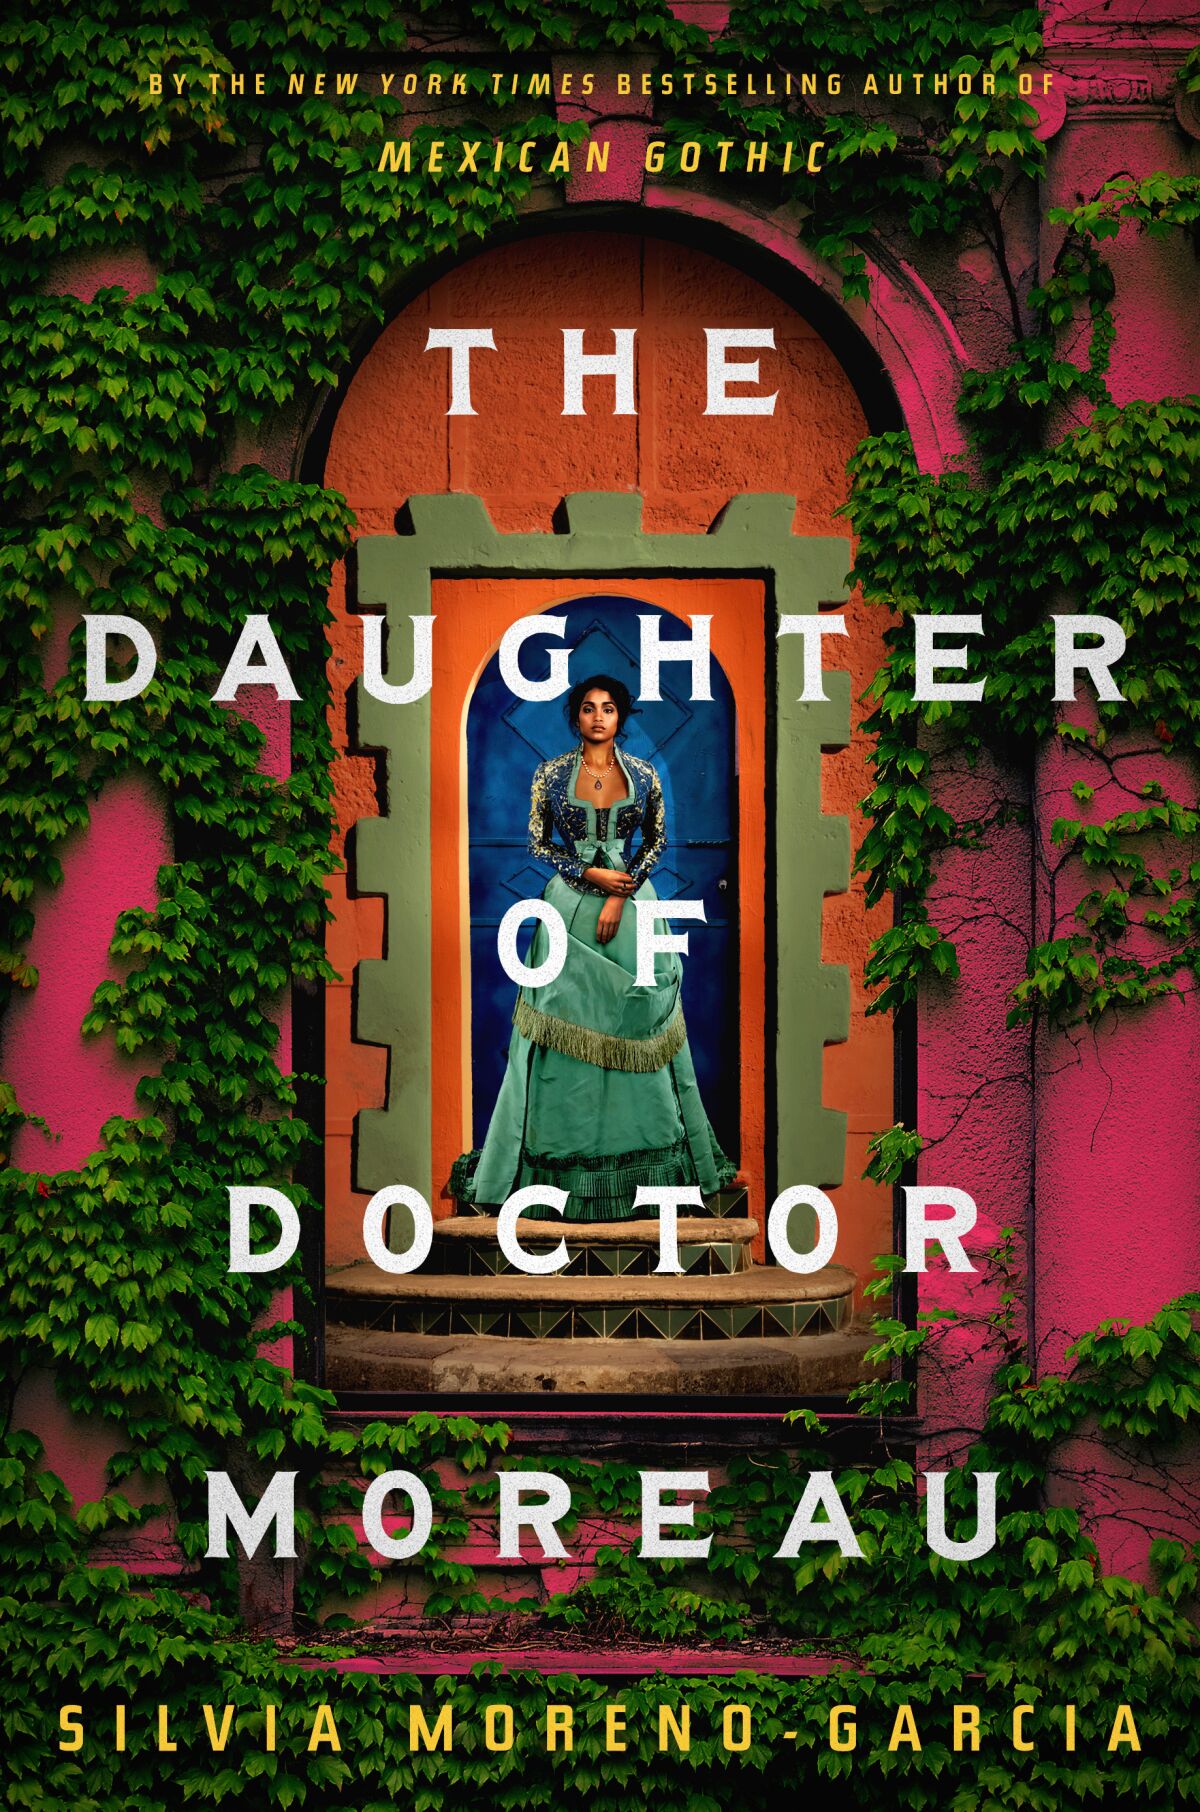 the book "The Daughter of Doctor Moreau" by Silvia Moreno-Garcia